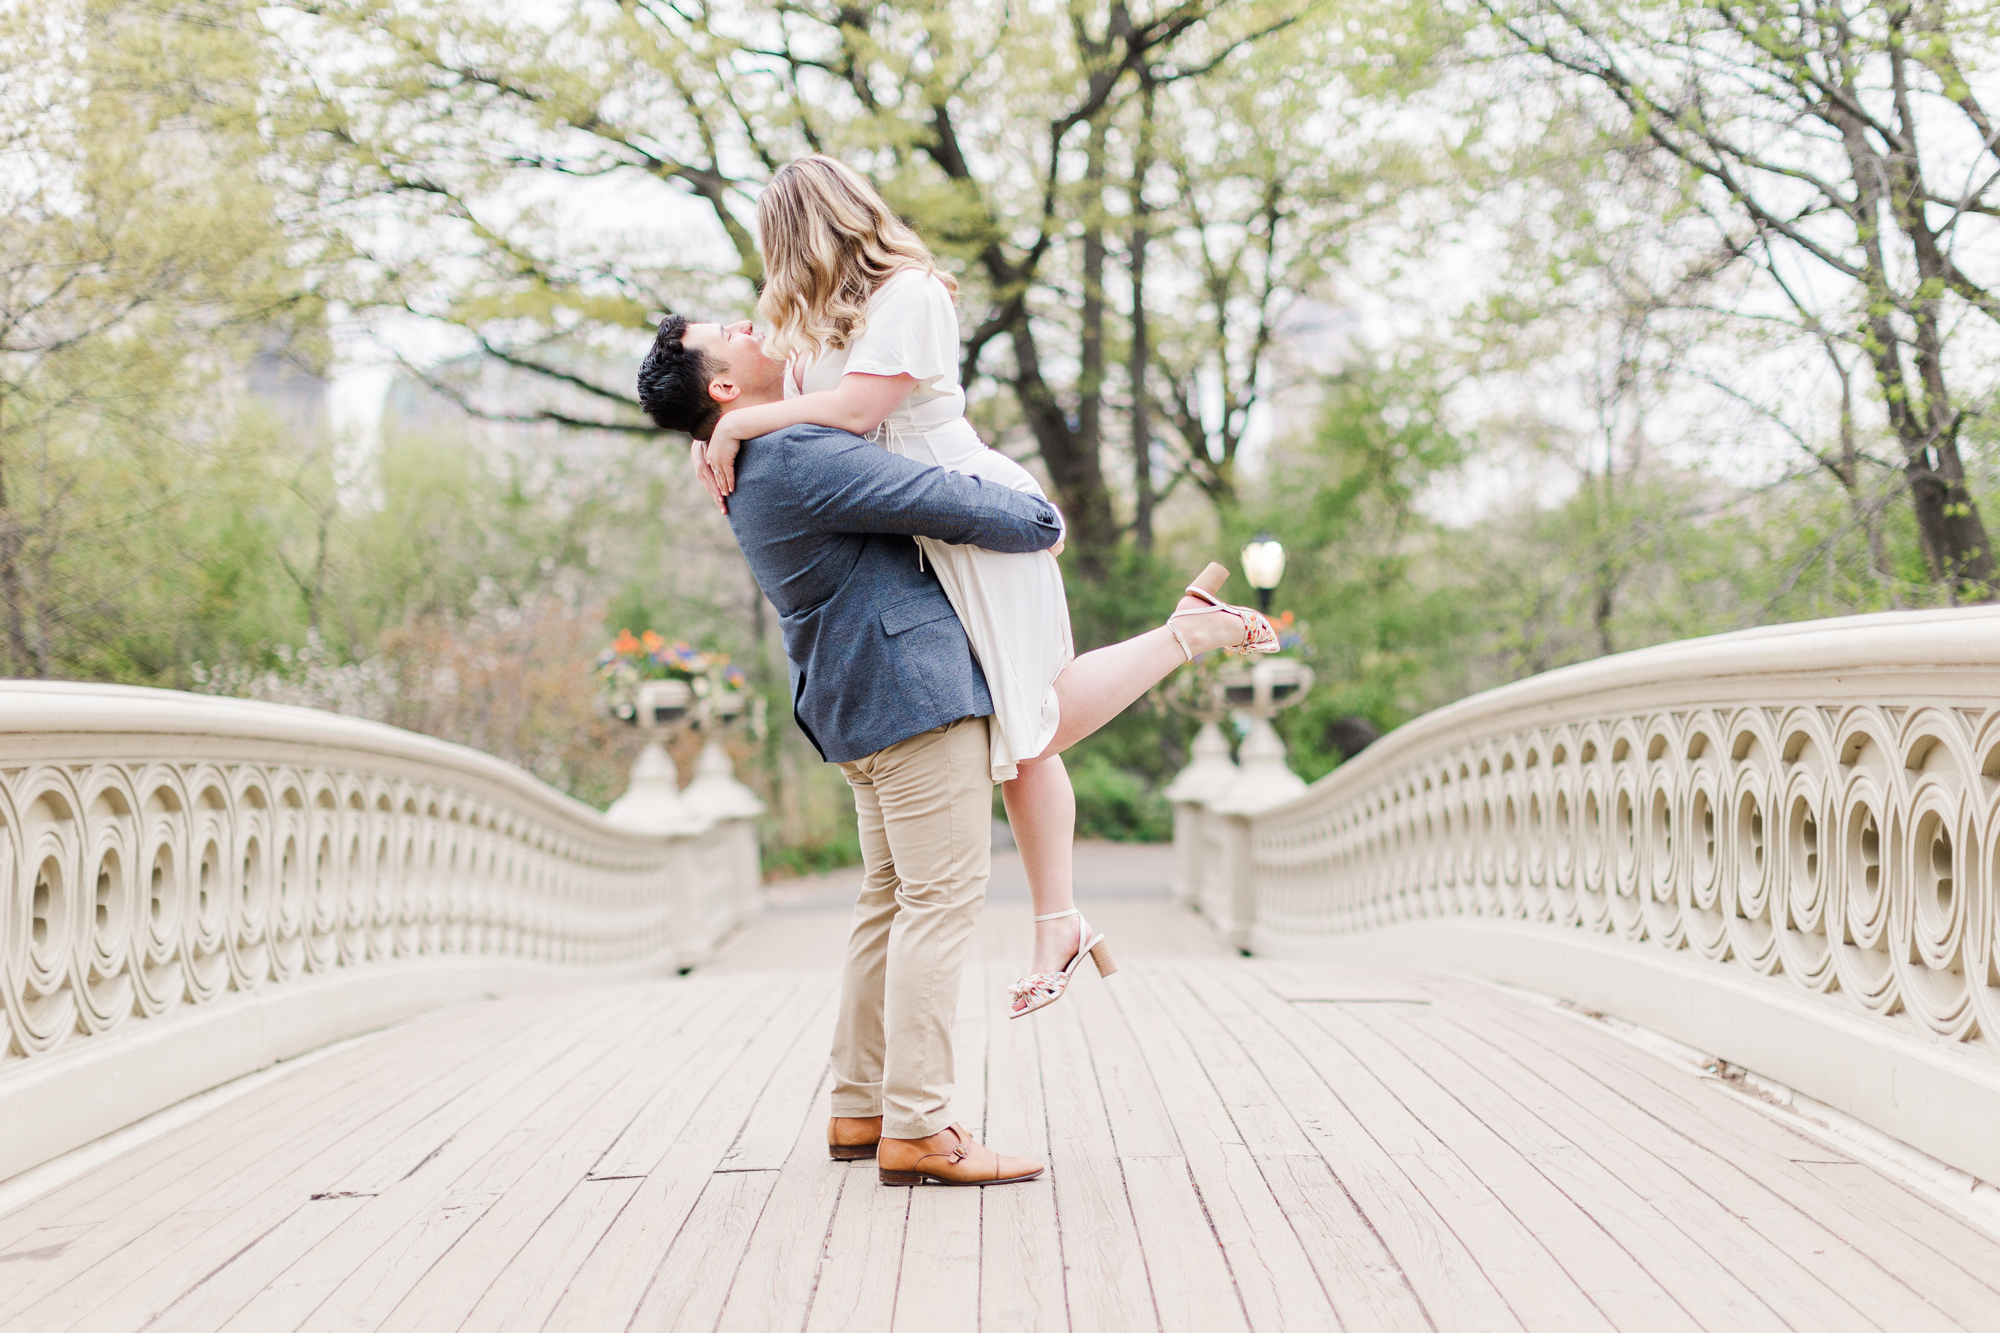 Romantic Engagement Pictures in Central Park